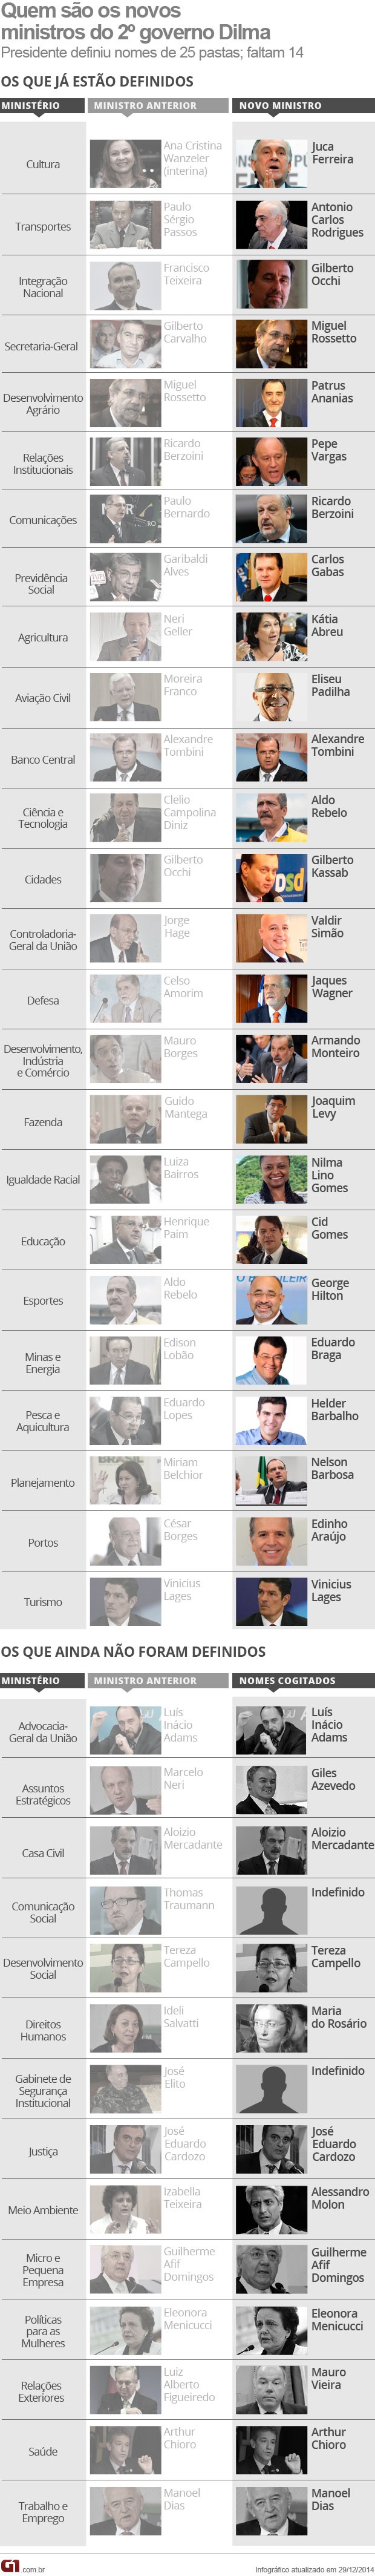 Equipe de ministros do segundo mandato da presidente Dilma Rousseff (Foto: Editoria de Arte / G1)